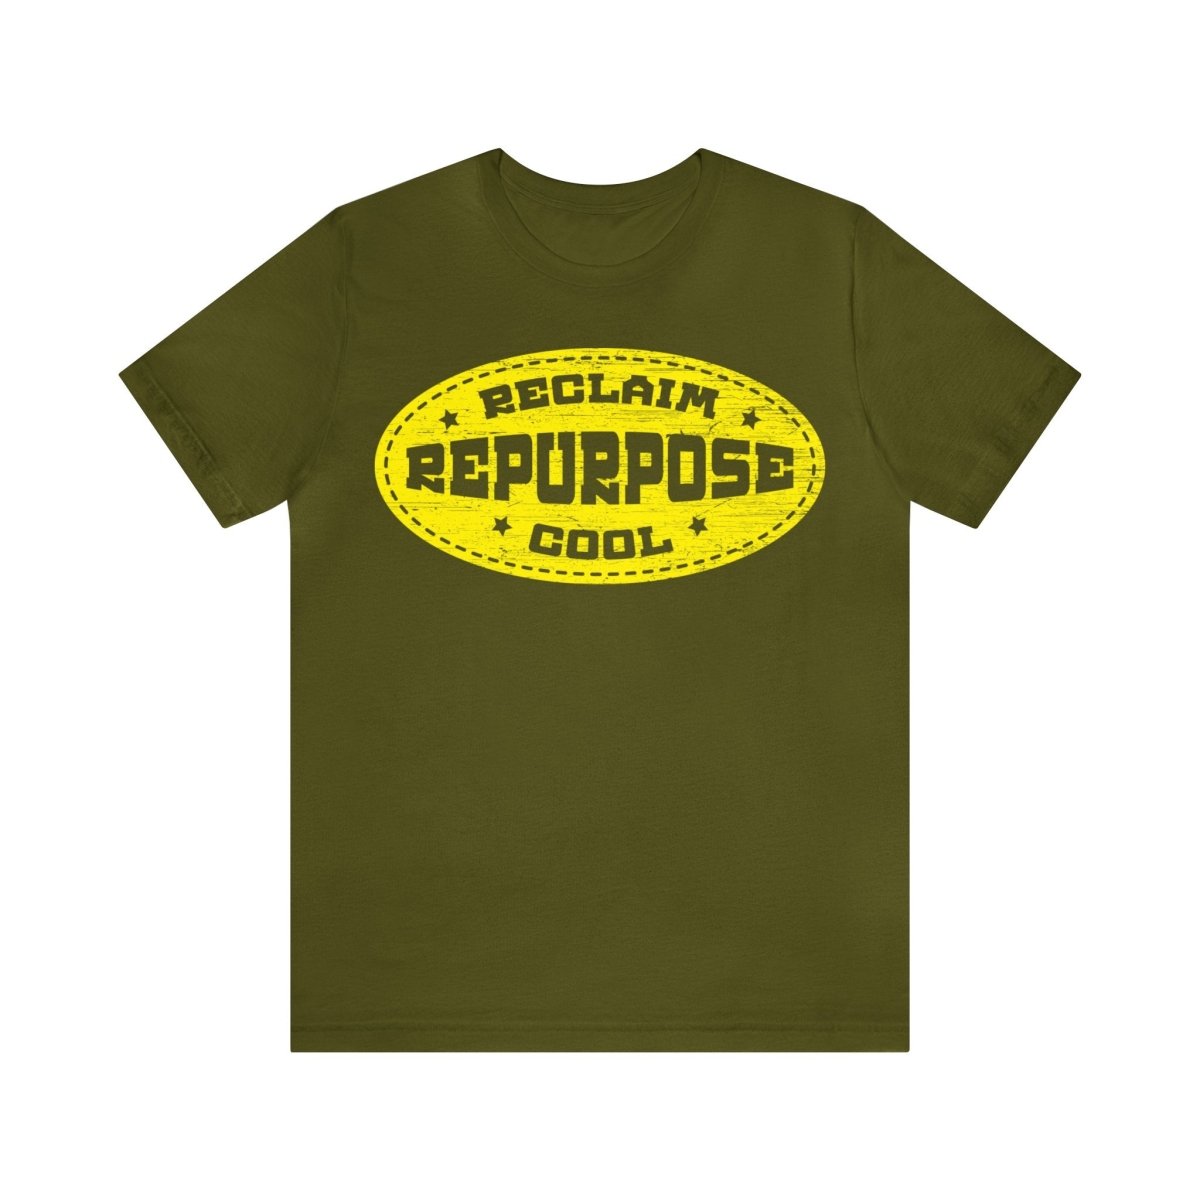 Reclaim Cool - Repurpose Premium T-Shirt, ReUse, Remake, Redo, DIY, Recycle, Upcycle, Self Reliance, Fix It, Junkin' Genius